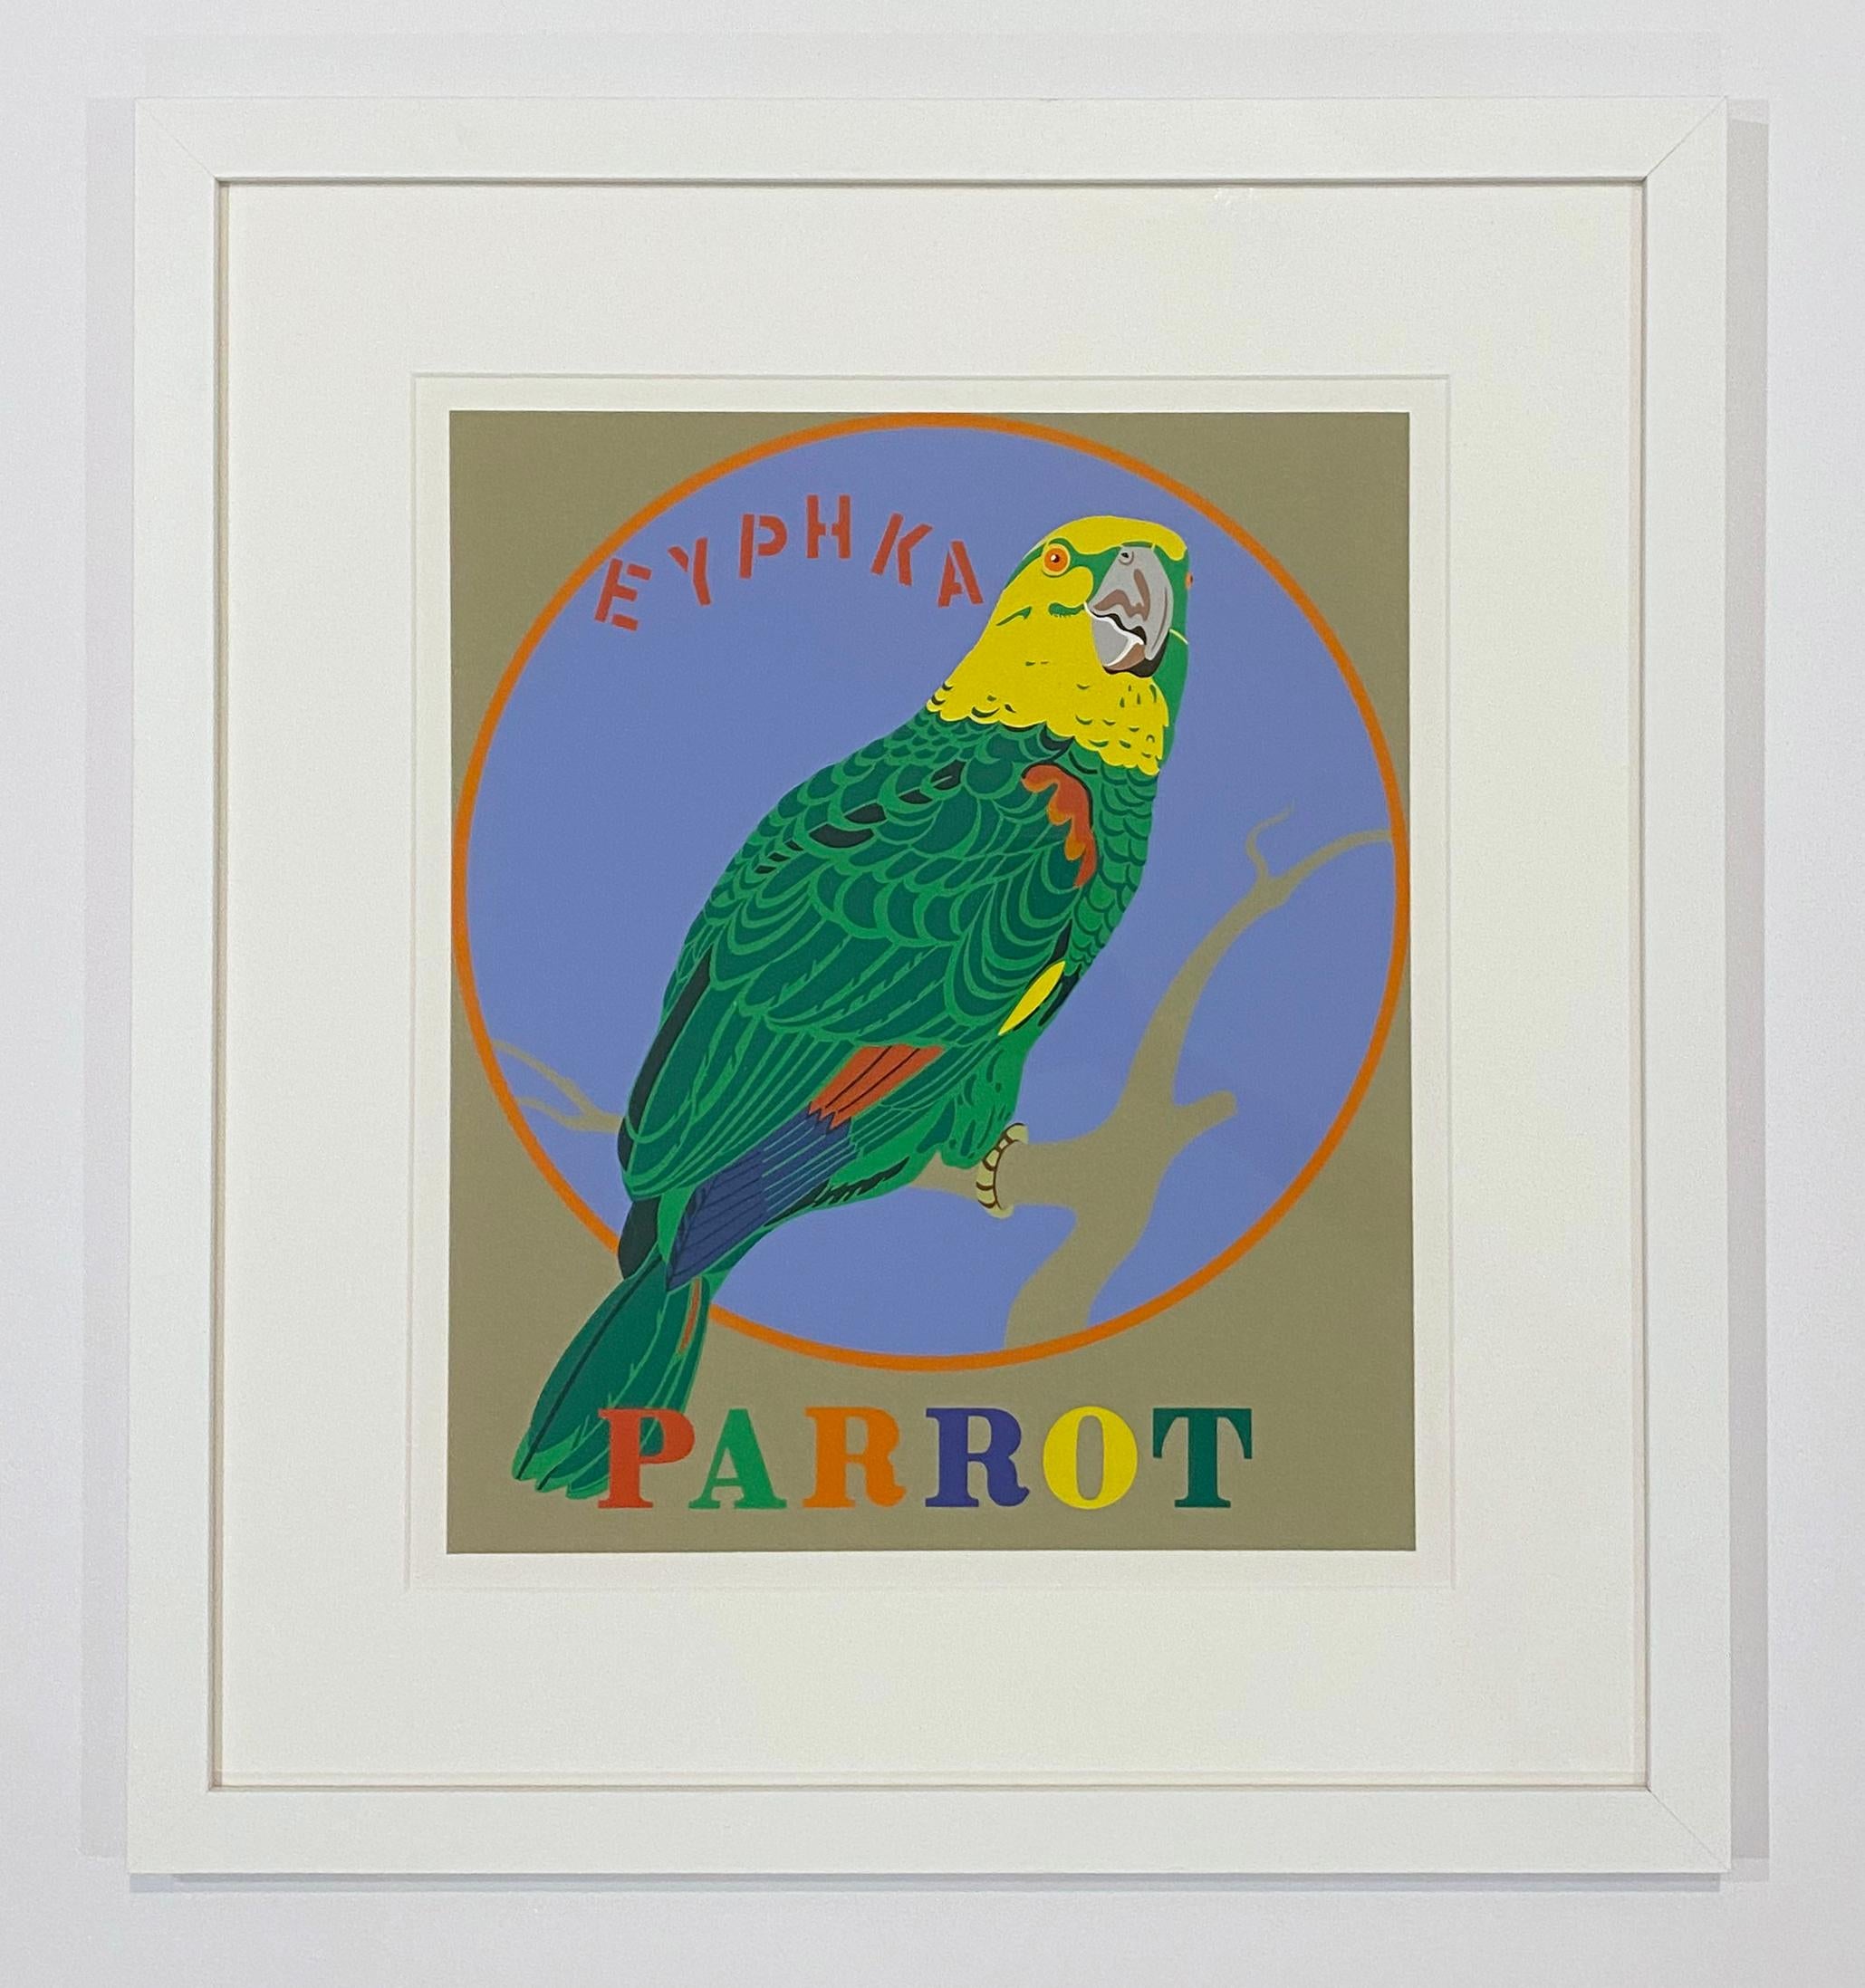 Artist: Robert Indiana
Title: Parrot
Portfolio: 1997 The American Dream
Medium: Original serigraph
Year: 1997
Edition: 76/395
Frame Size: 25 1/4